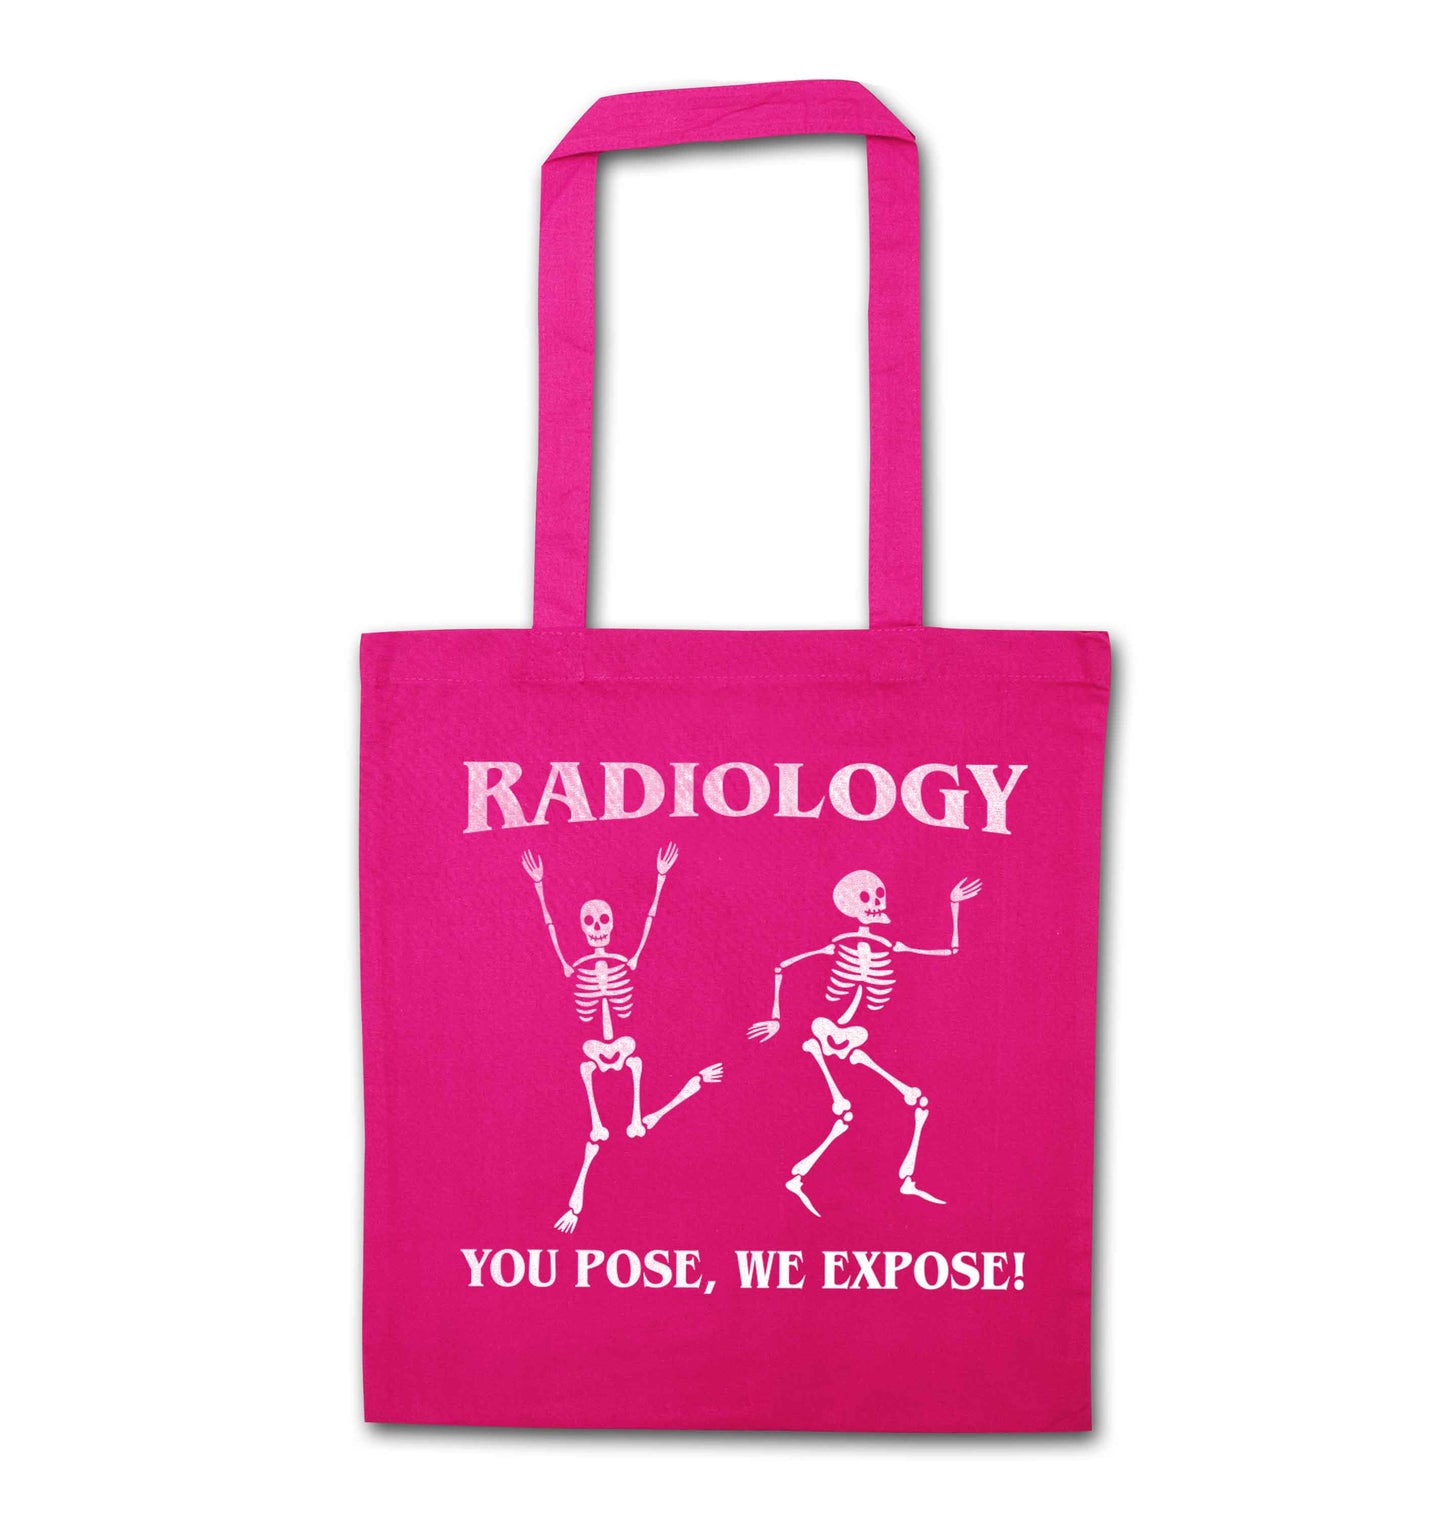 Radiology you pose we expose pink tote bag